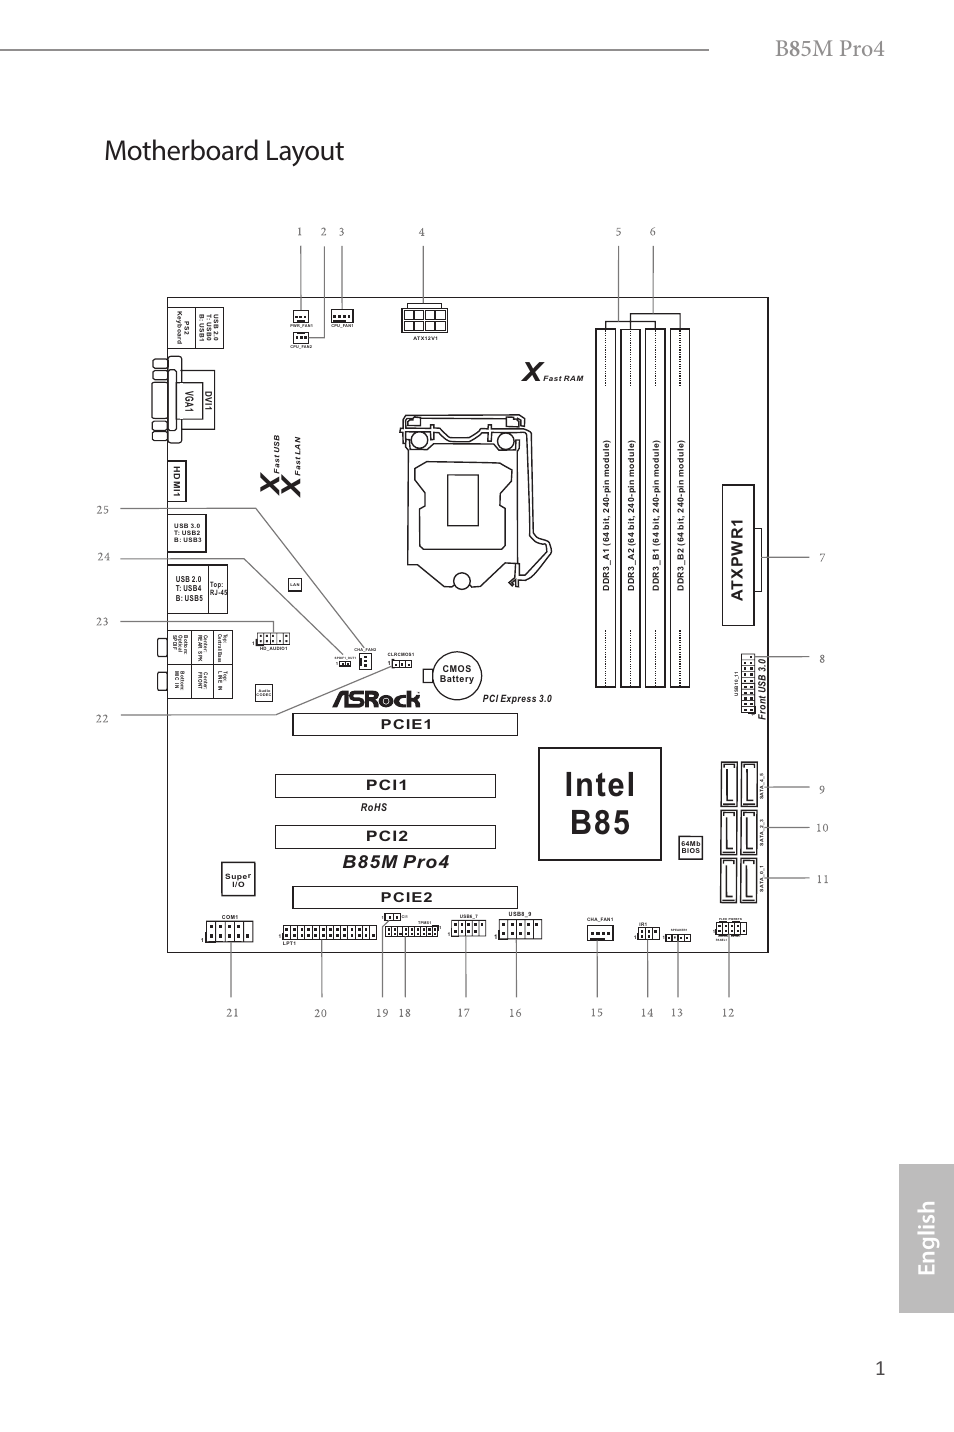 Intel b85, Motherboard layout, B 8 5m pro4 | ASRock B85M Pro4 User Manual |  Page 3 / 163 | Original mode